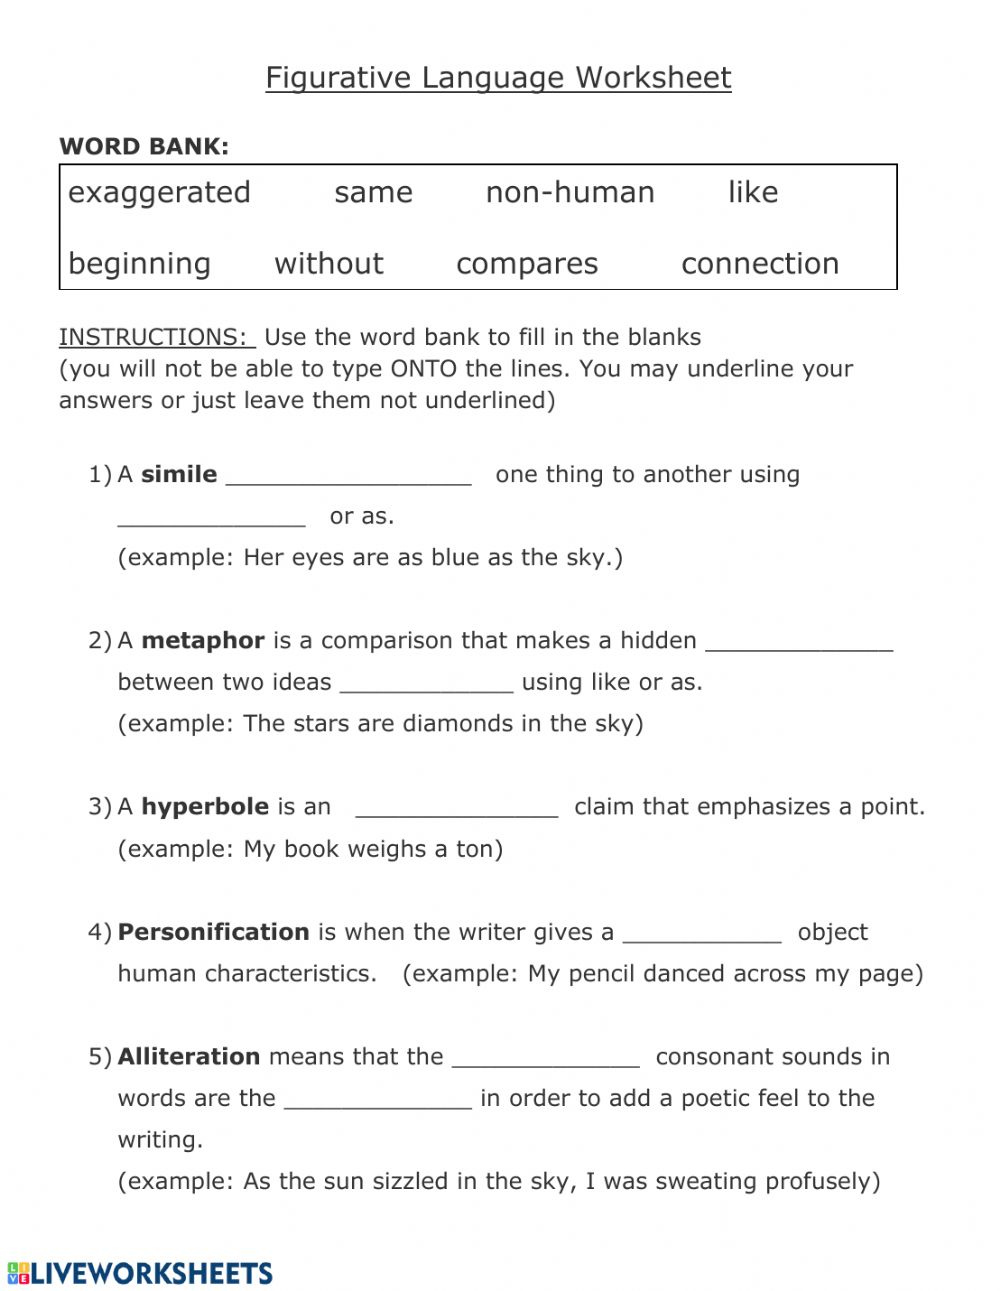 Figurative Language Worksheet Worksheet